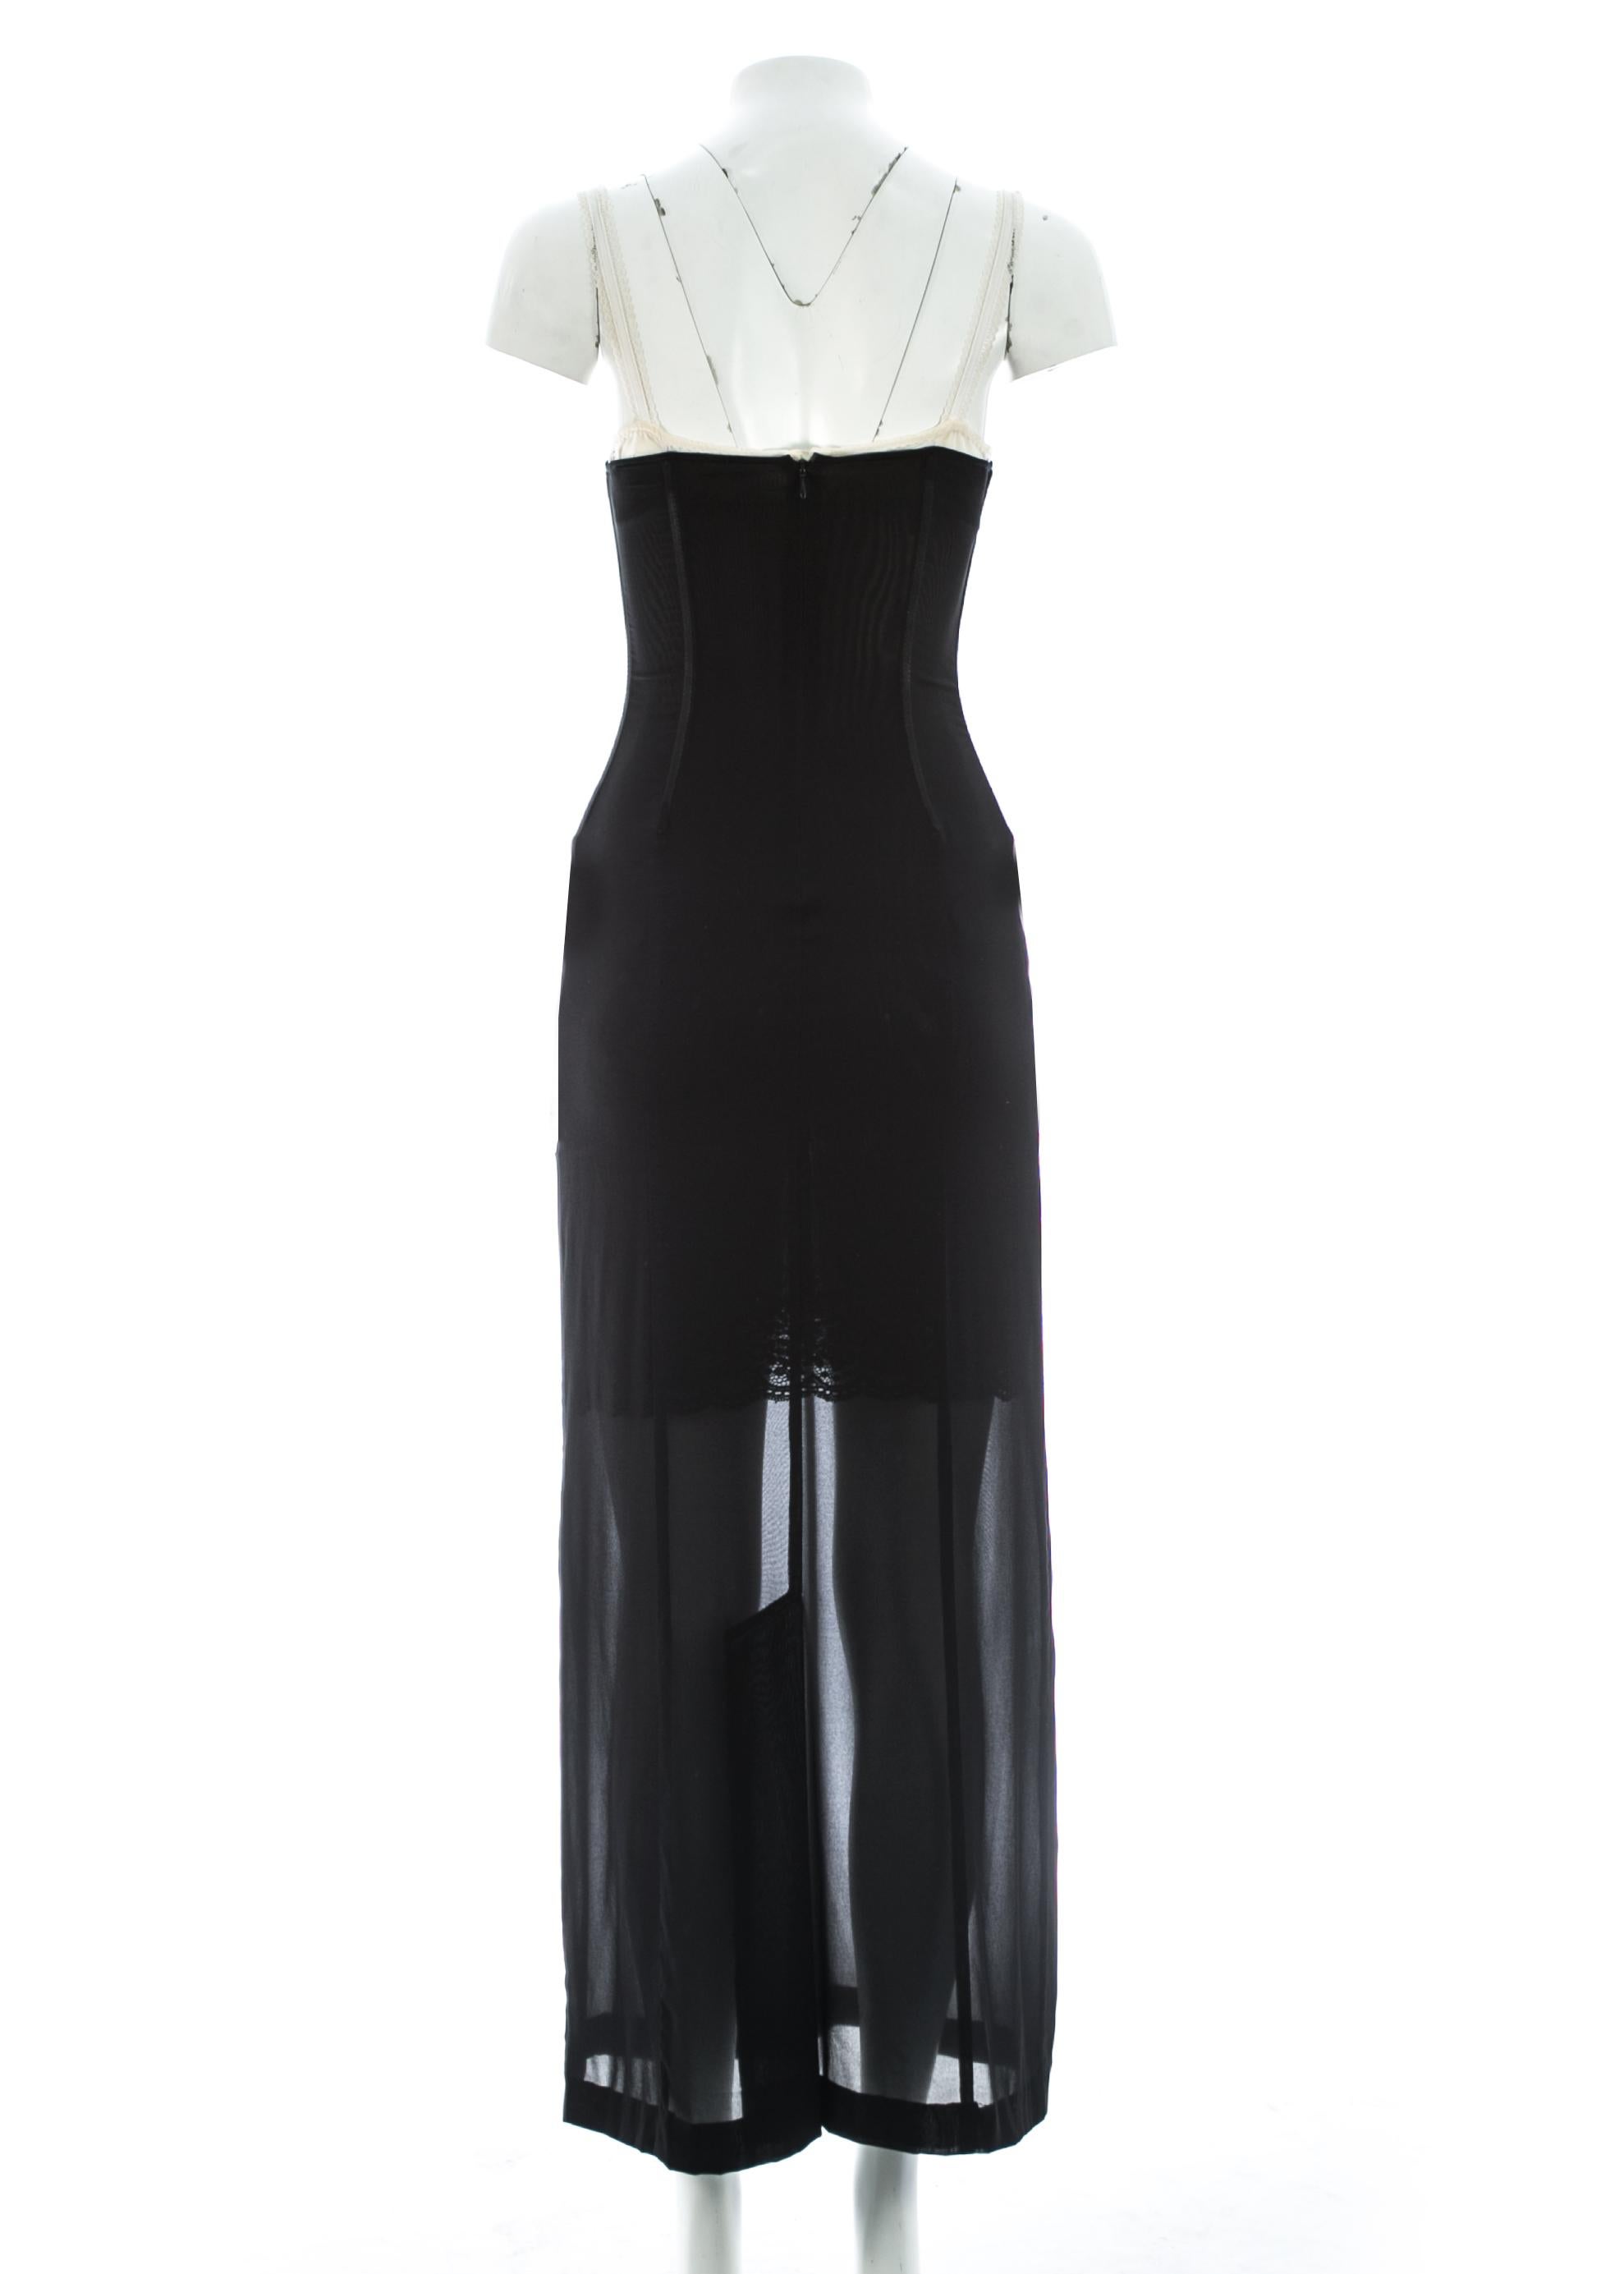 Dolce & Gabbana black silk chiffon corseted evening dress, A/W 1997 2